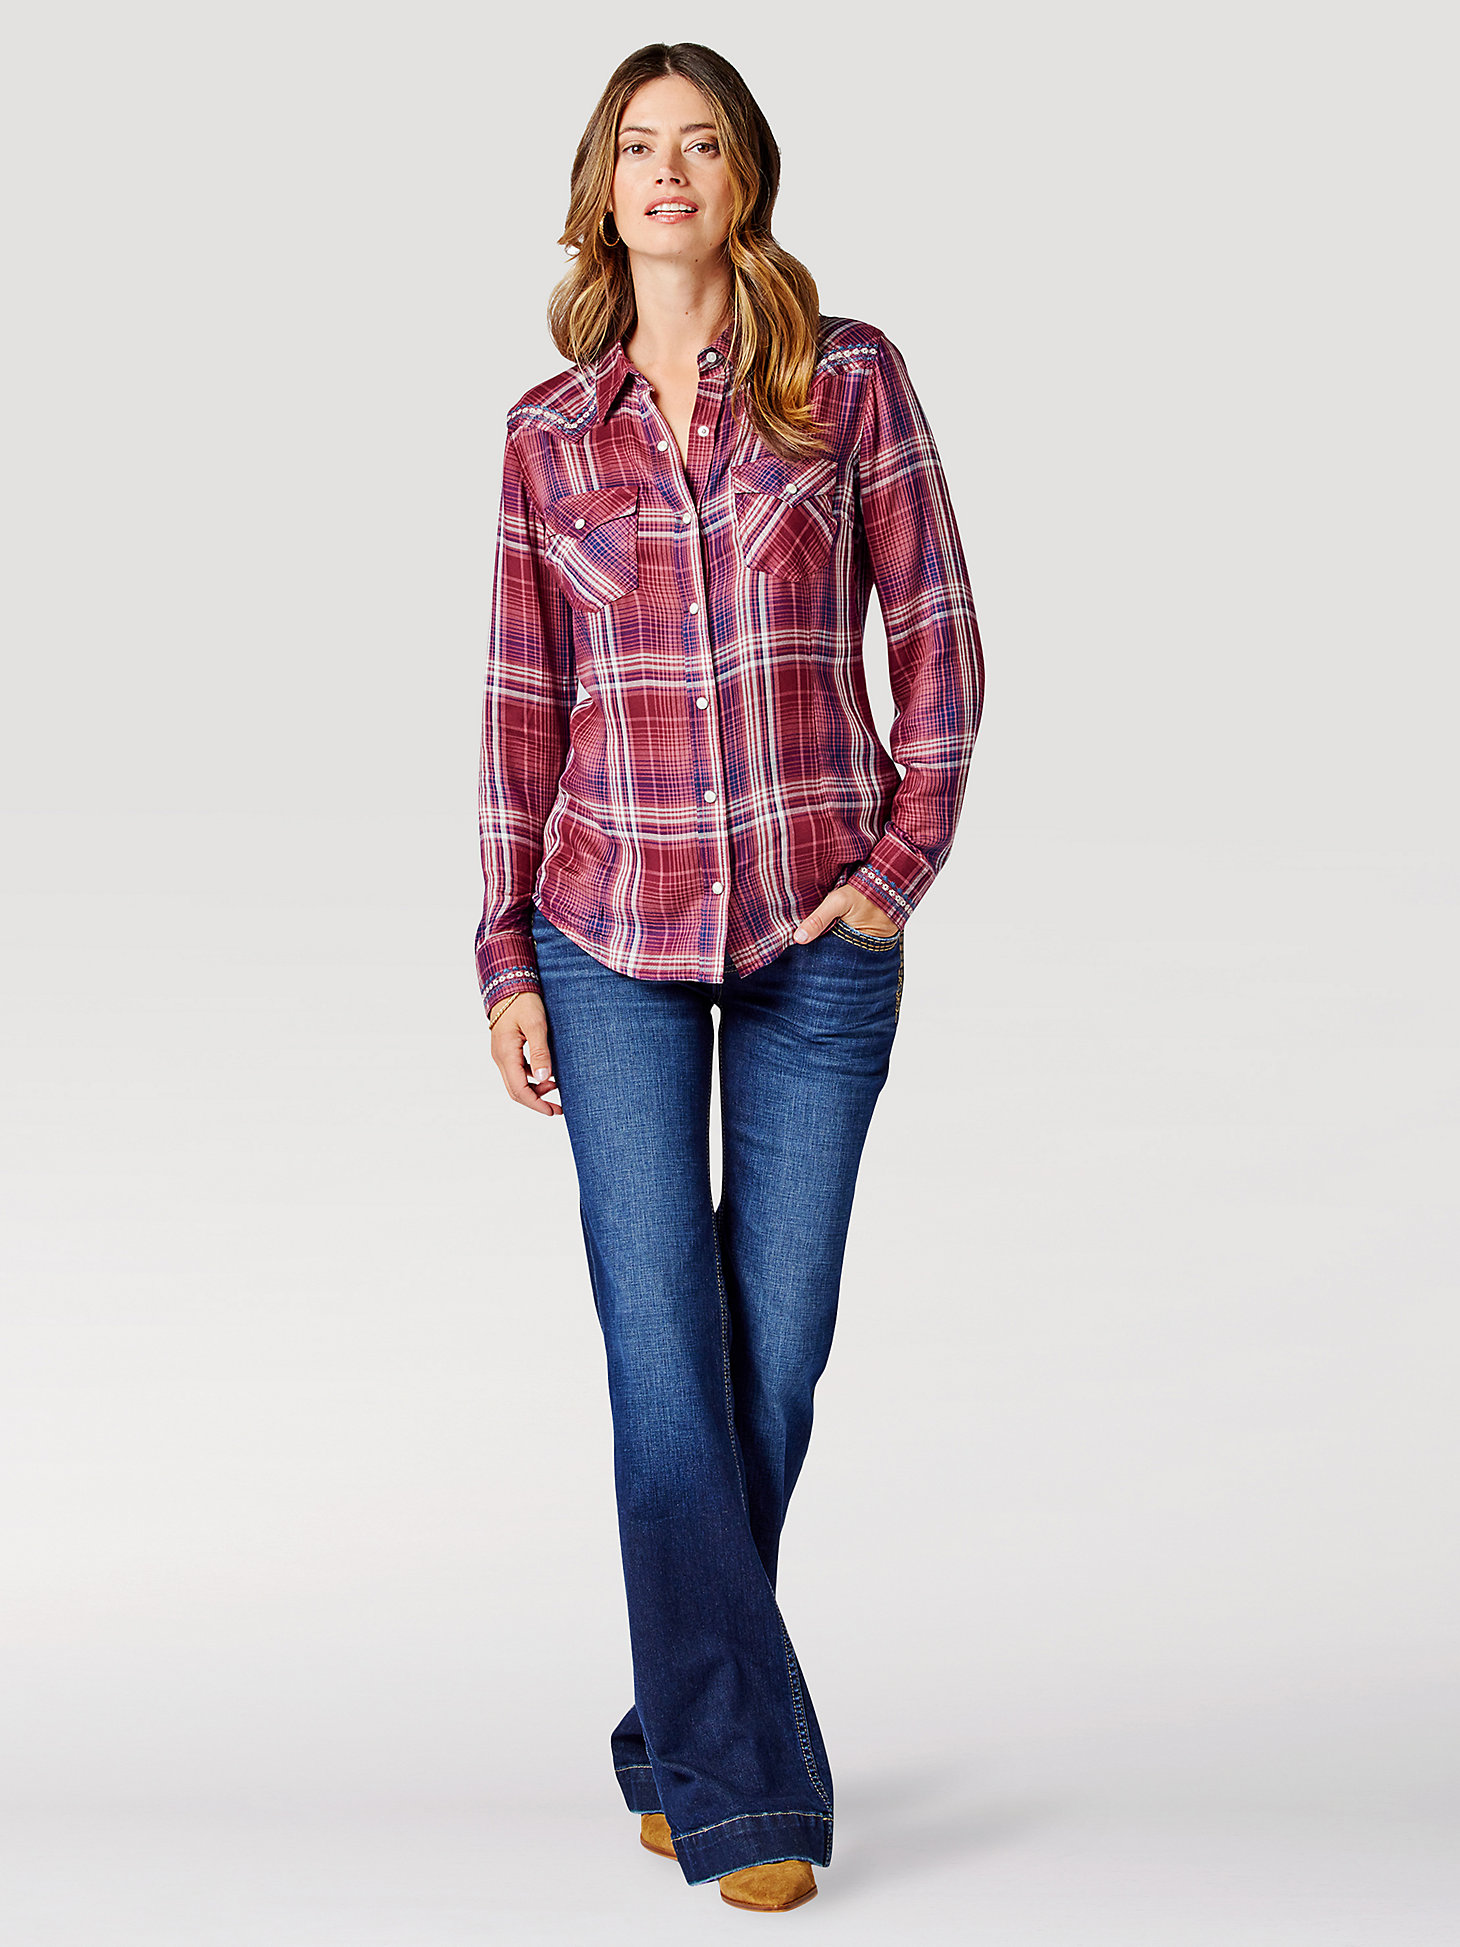 Women's Wrangler Retro® Long Sleeve Embroidered Yoke Western Snap Shirt in Cru alternative view 1